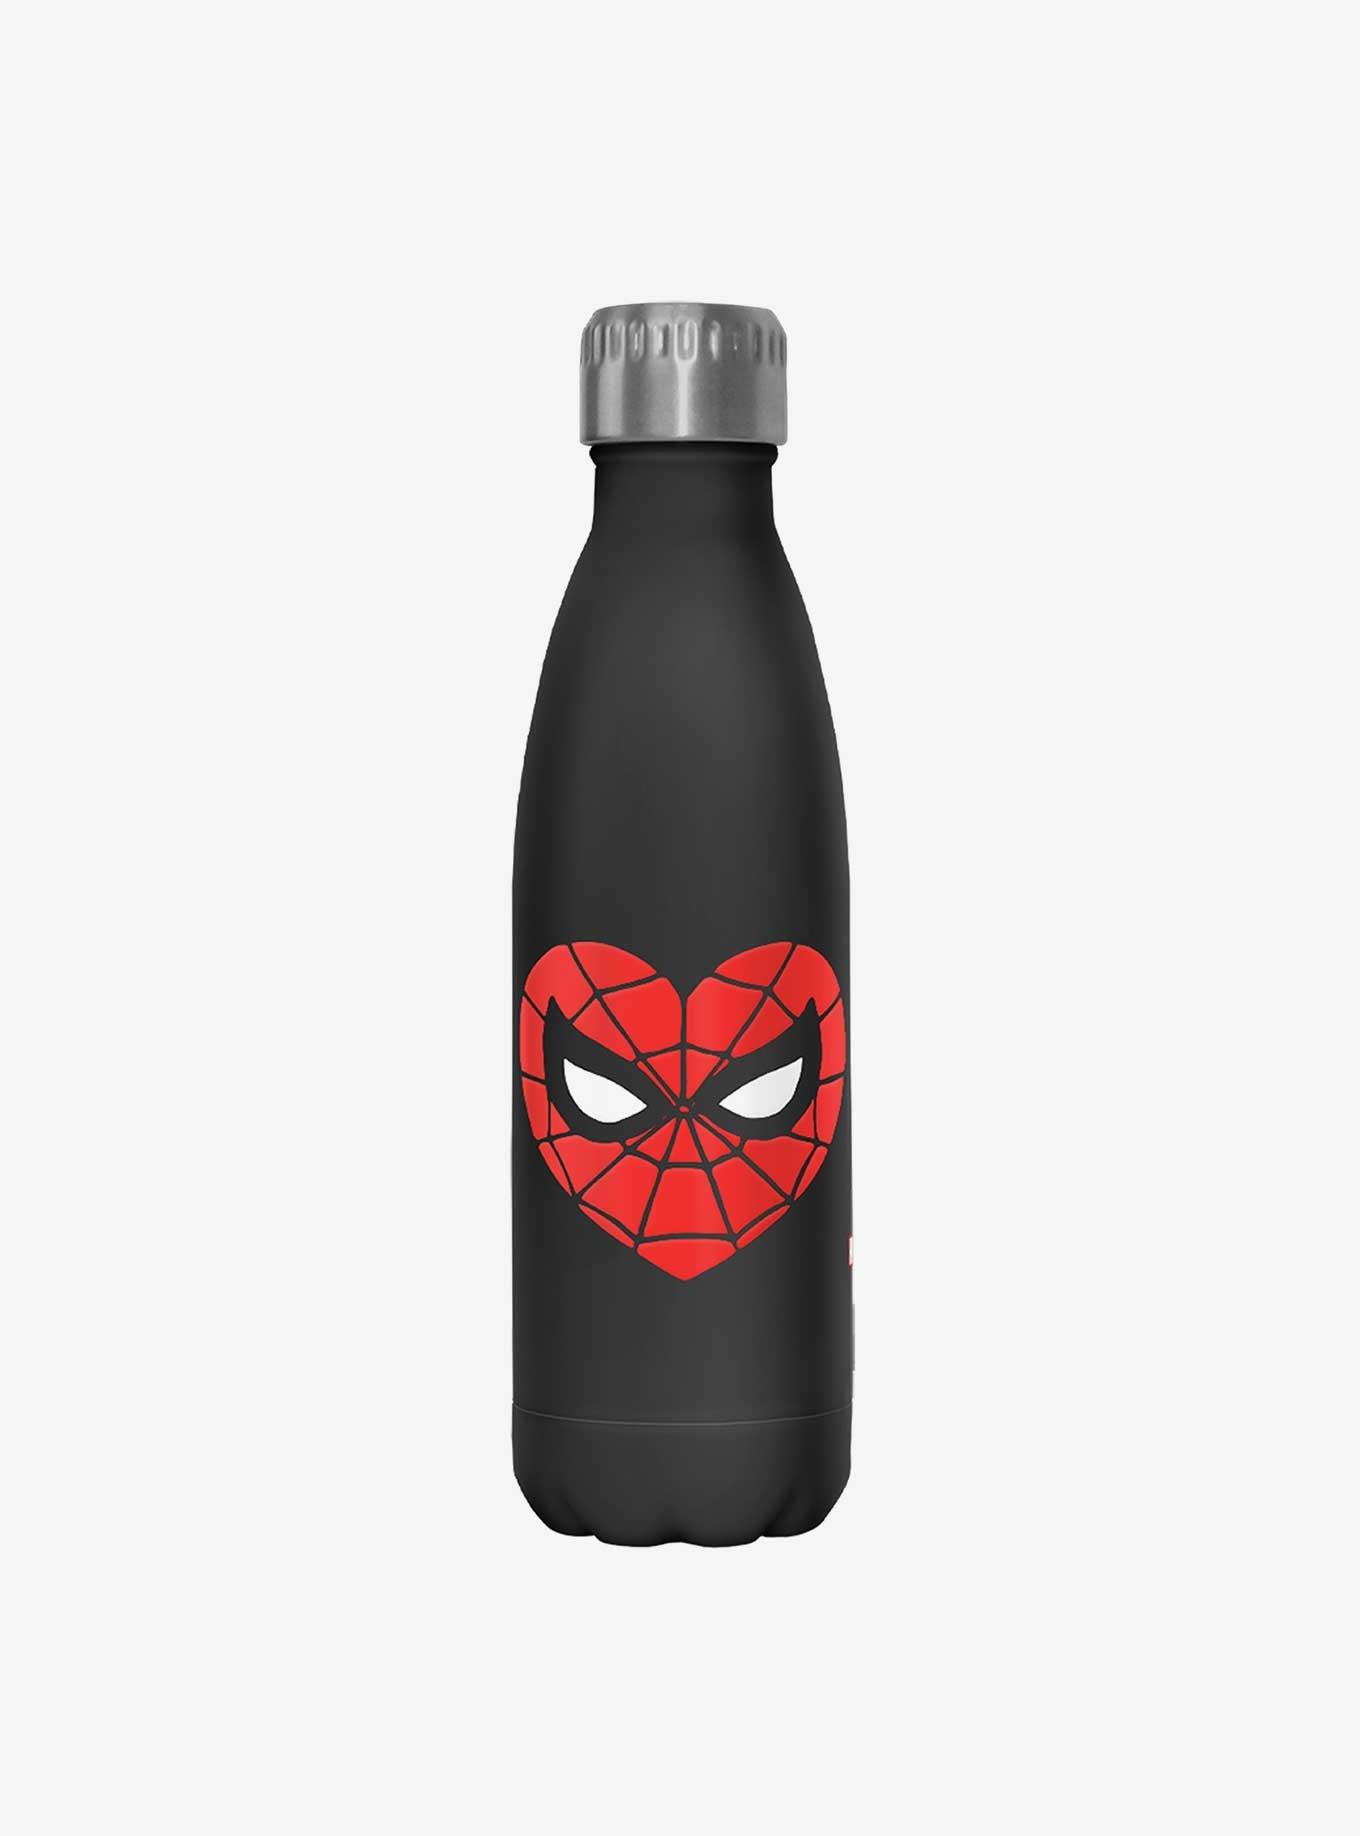 Marvel Spider-Man Team Amazing Stainless Steel Water Bottle